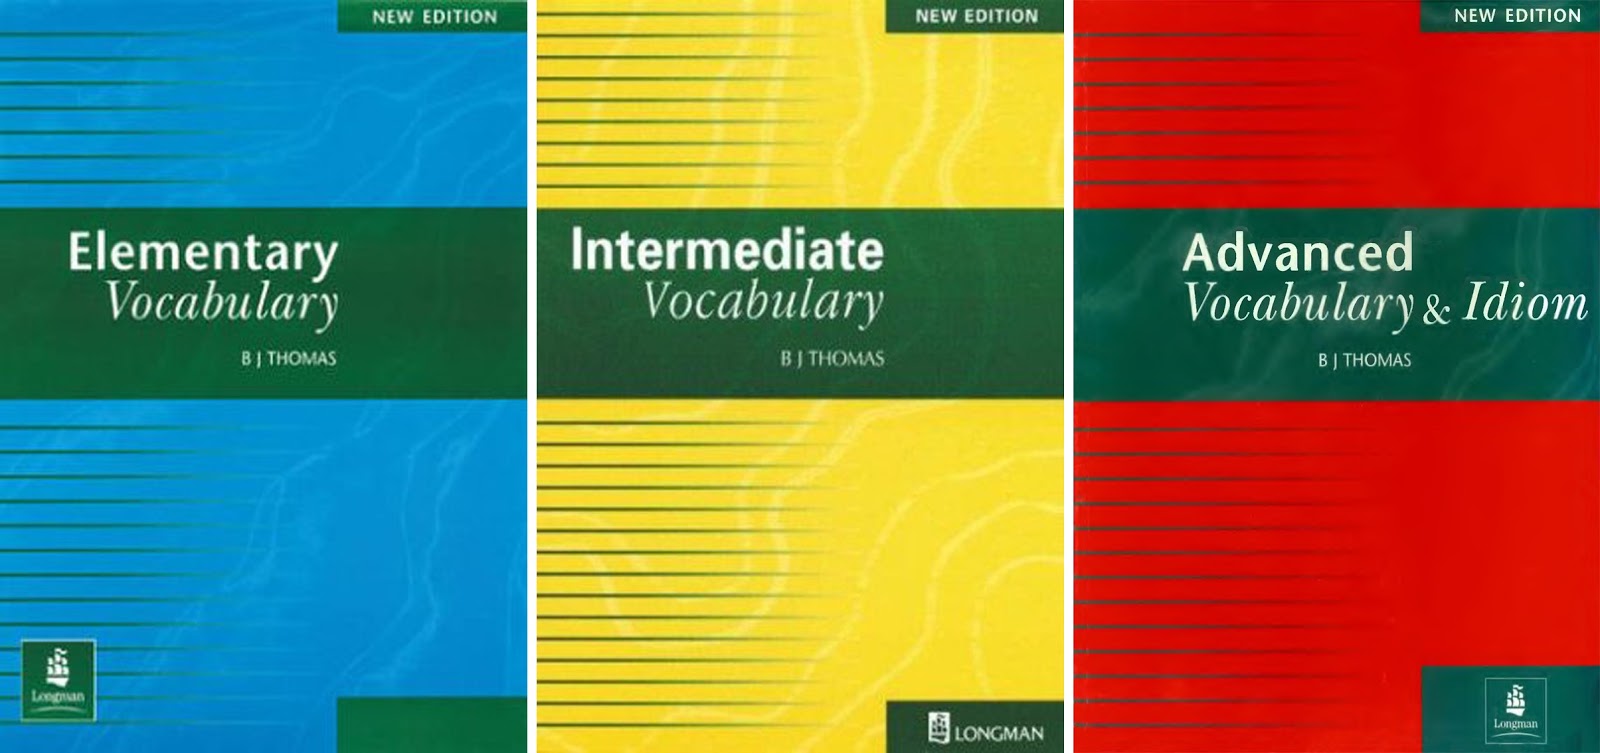 Intermediate english practice. Thomas Vocabulary. Longman Vocabulary Intermediate Thomas. Elementary Vocabulary b j Thomas. Thomas Advanced Vocabulary and idioms.